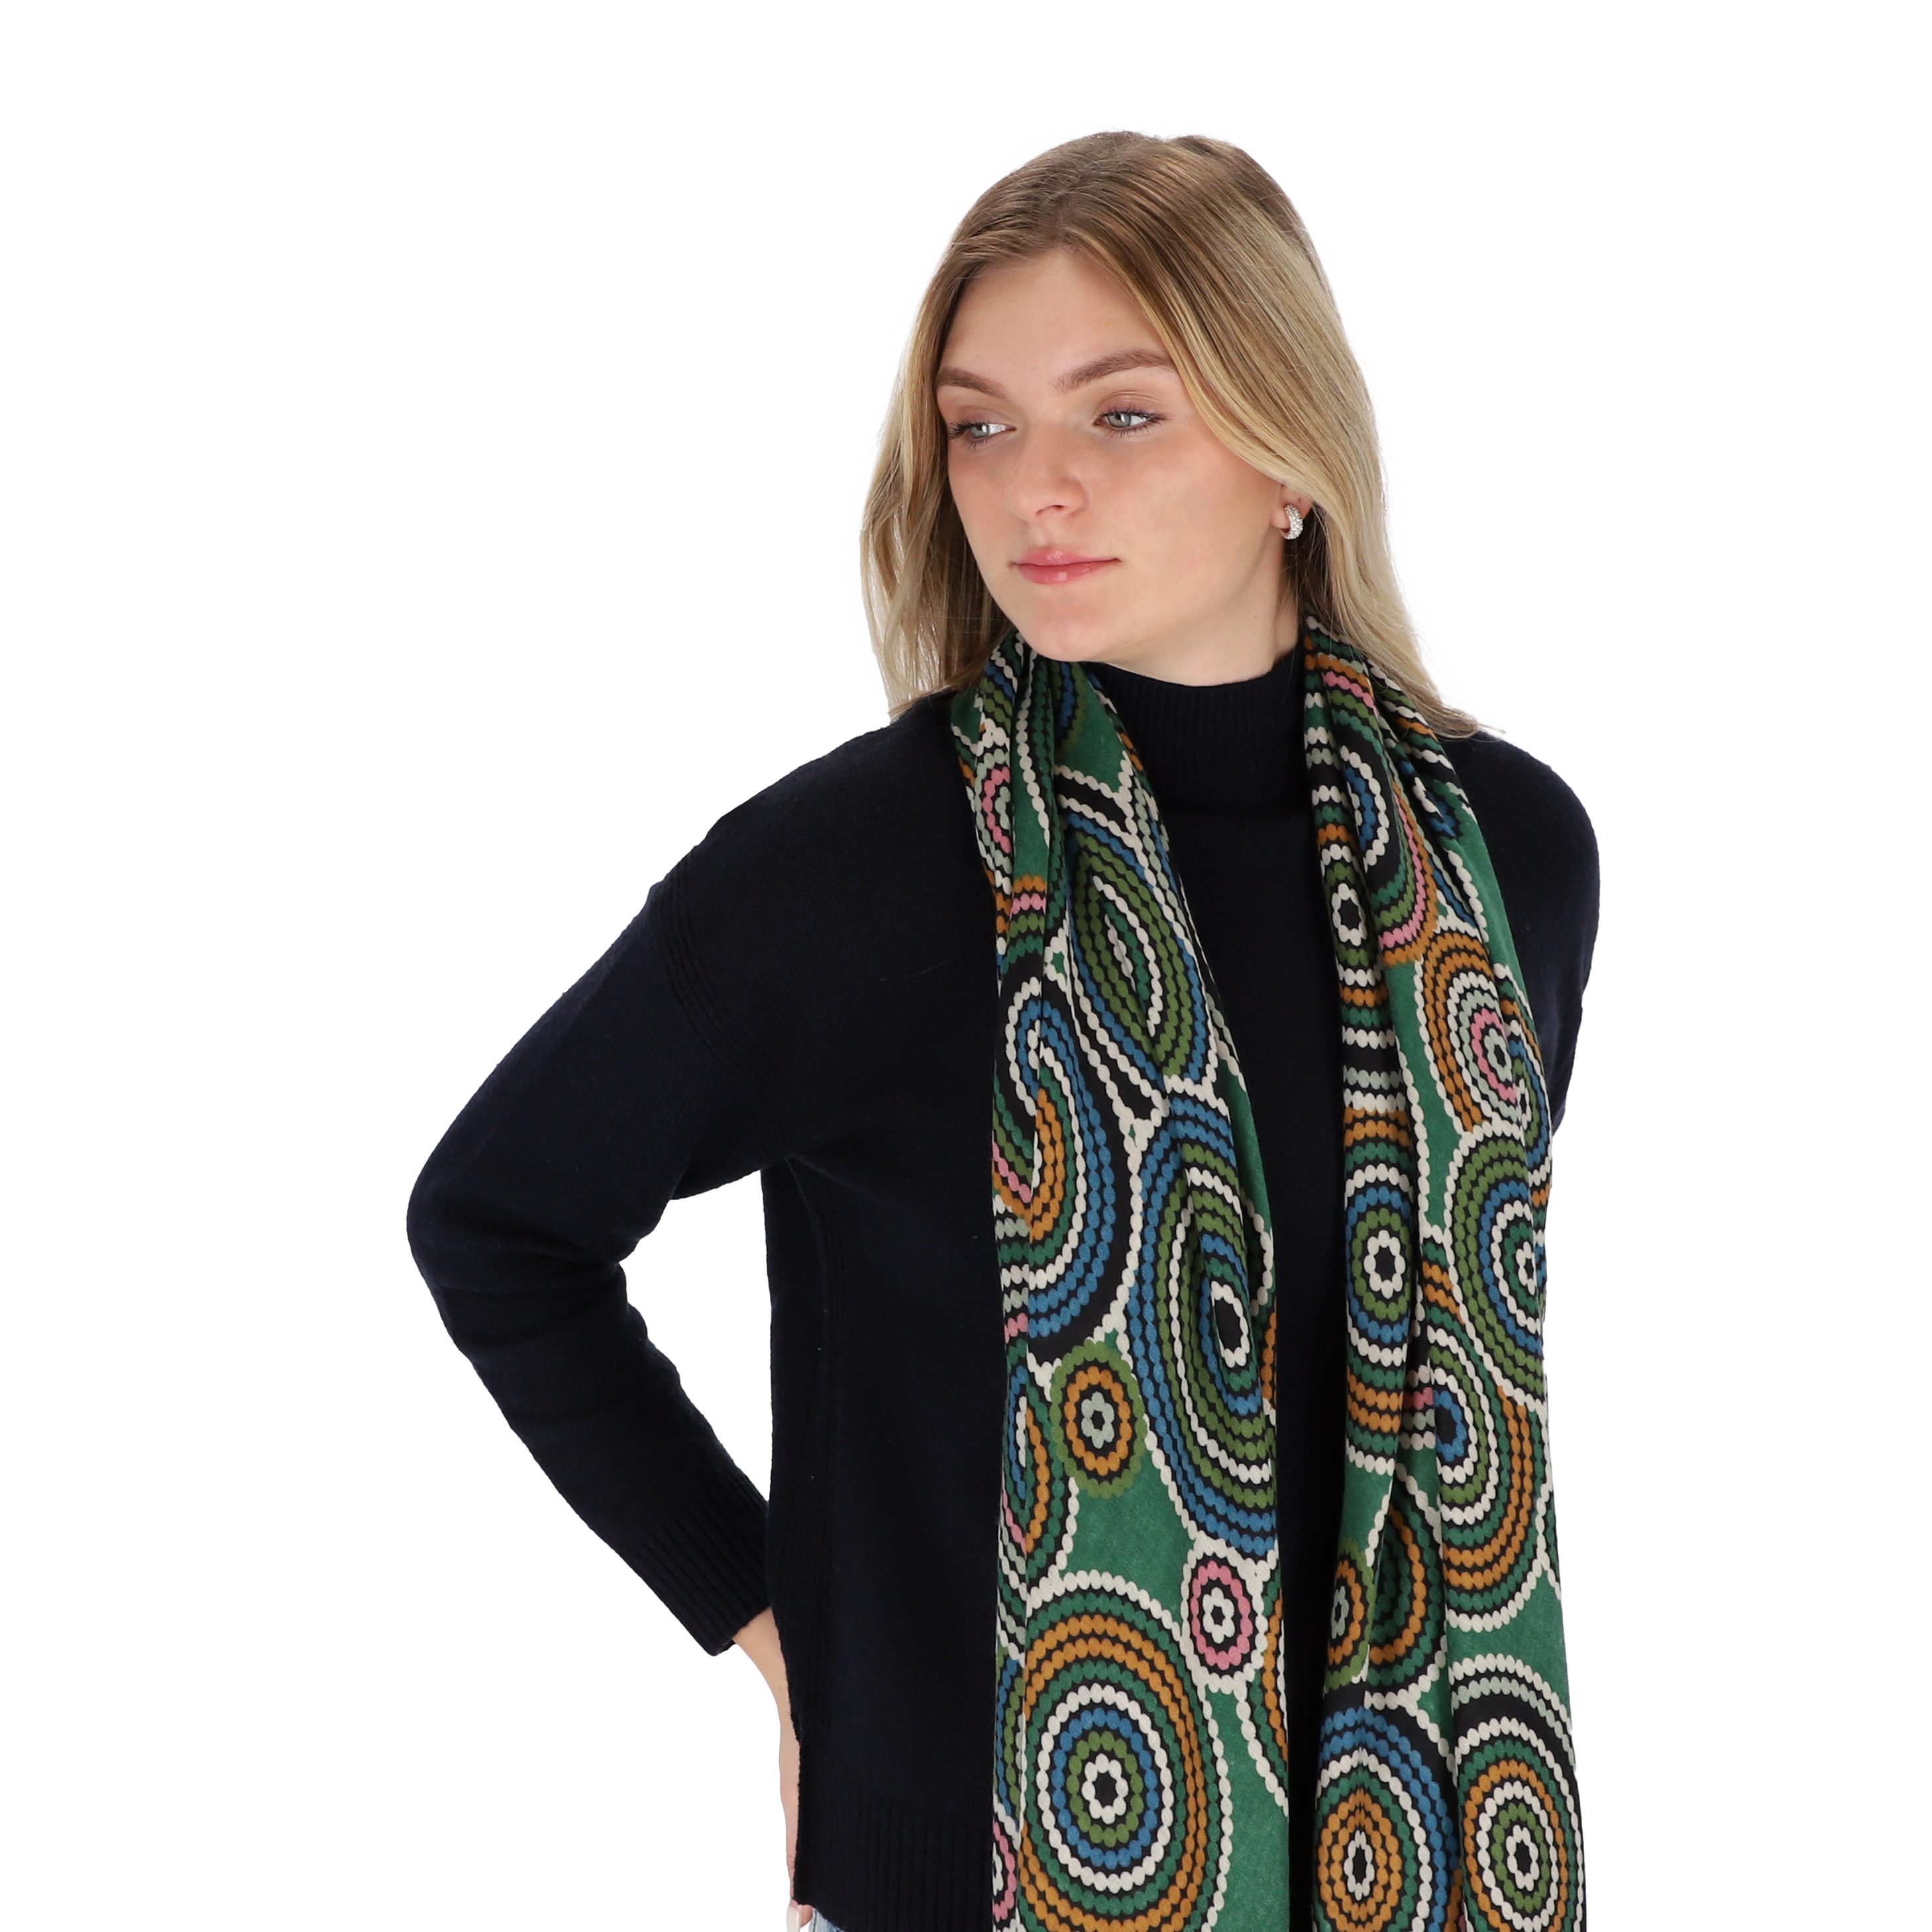 Farben! Mandala, in halsüberkopf Modeschal Accessoires Schal tollen grün